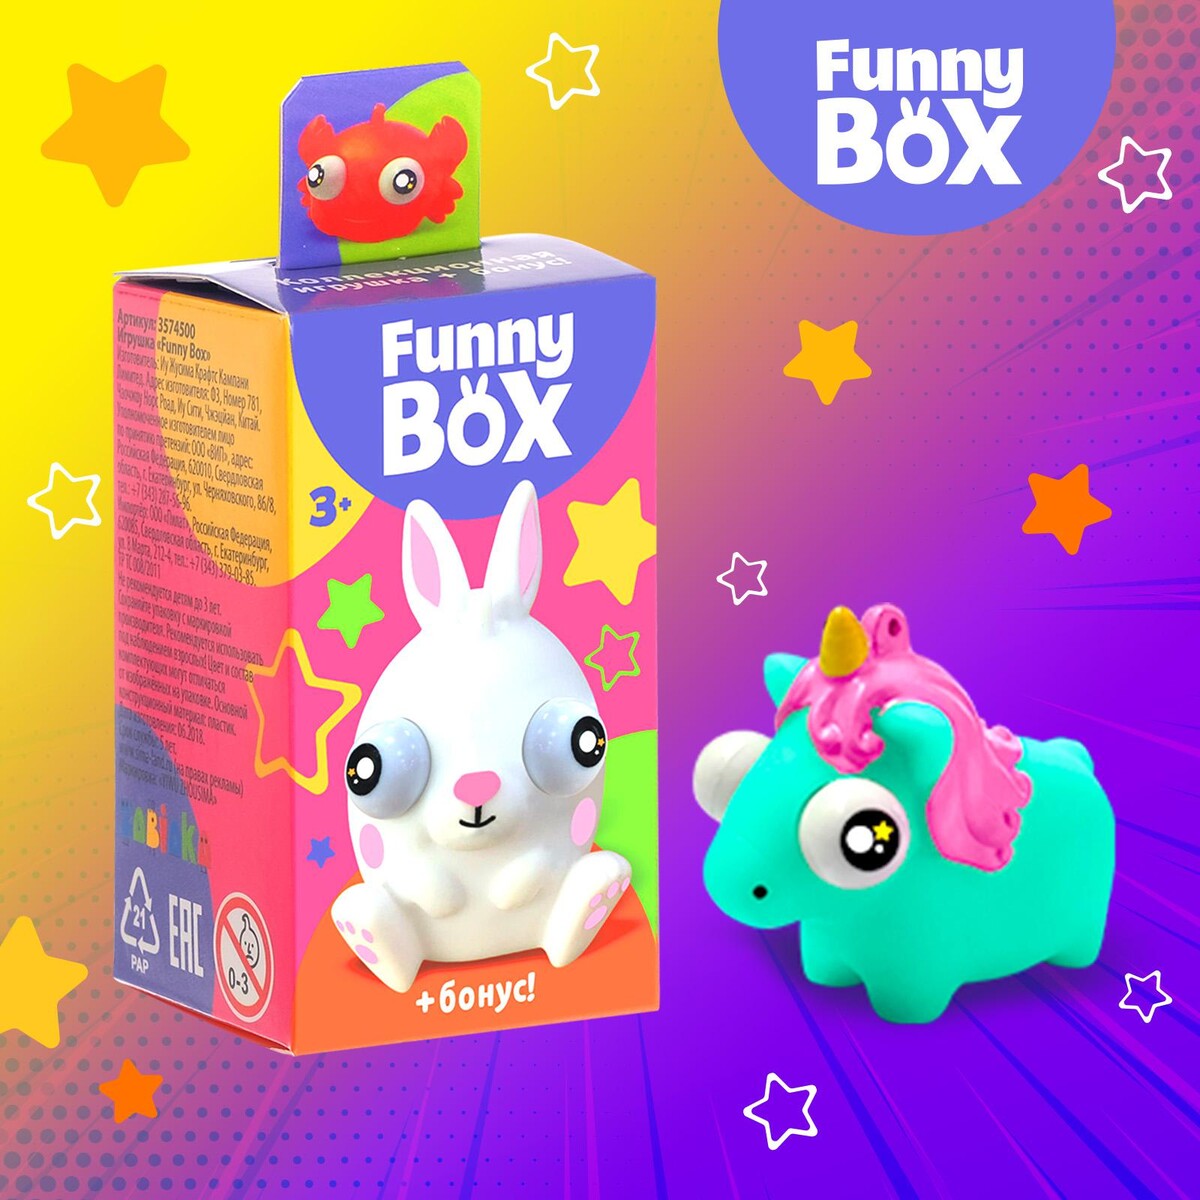   funny box